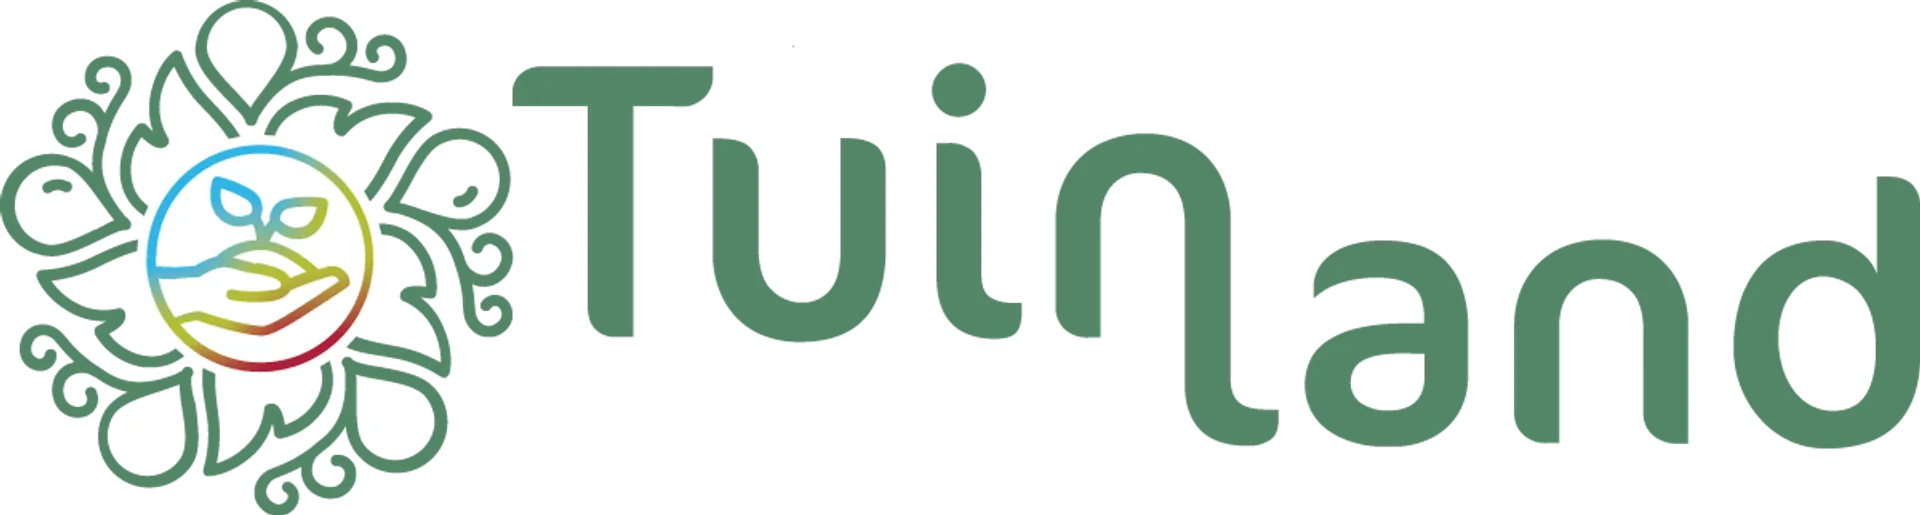 TUINLAND logo